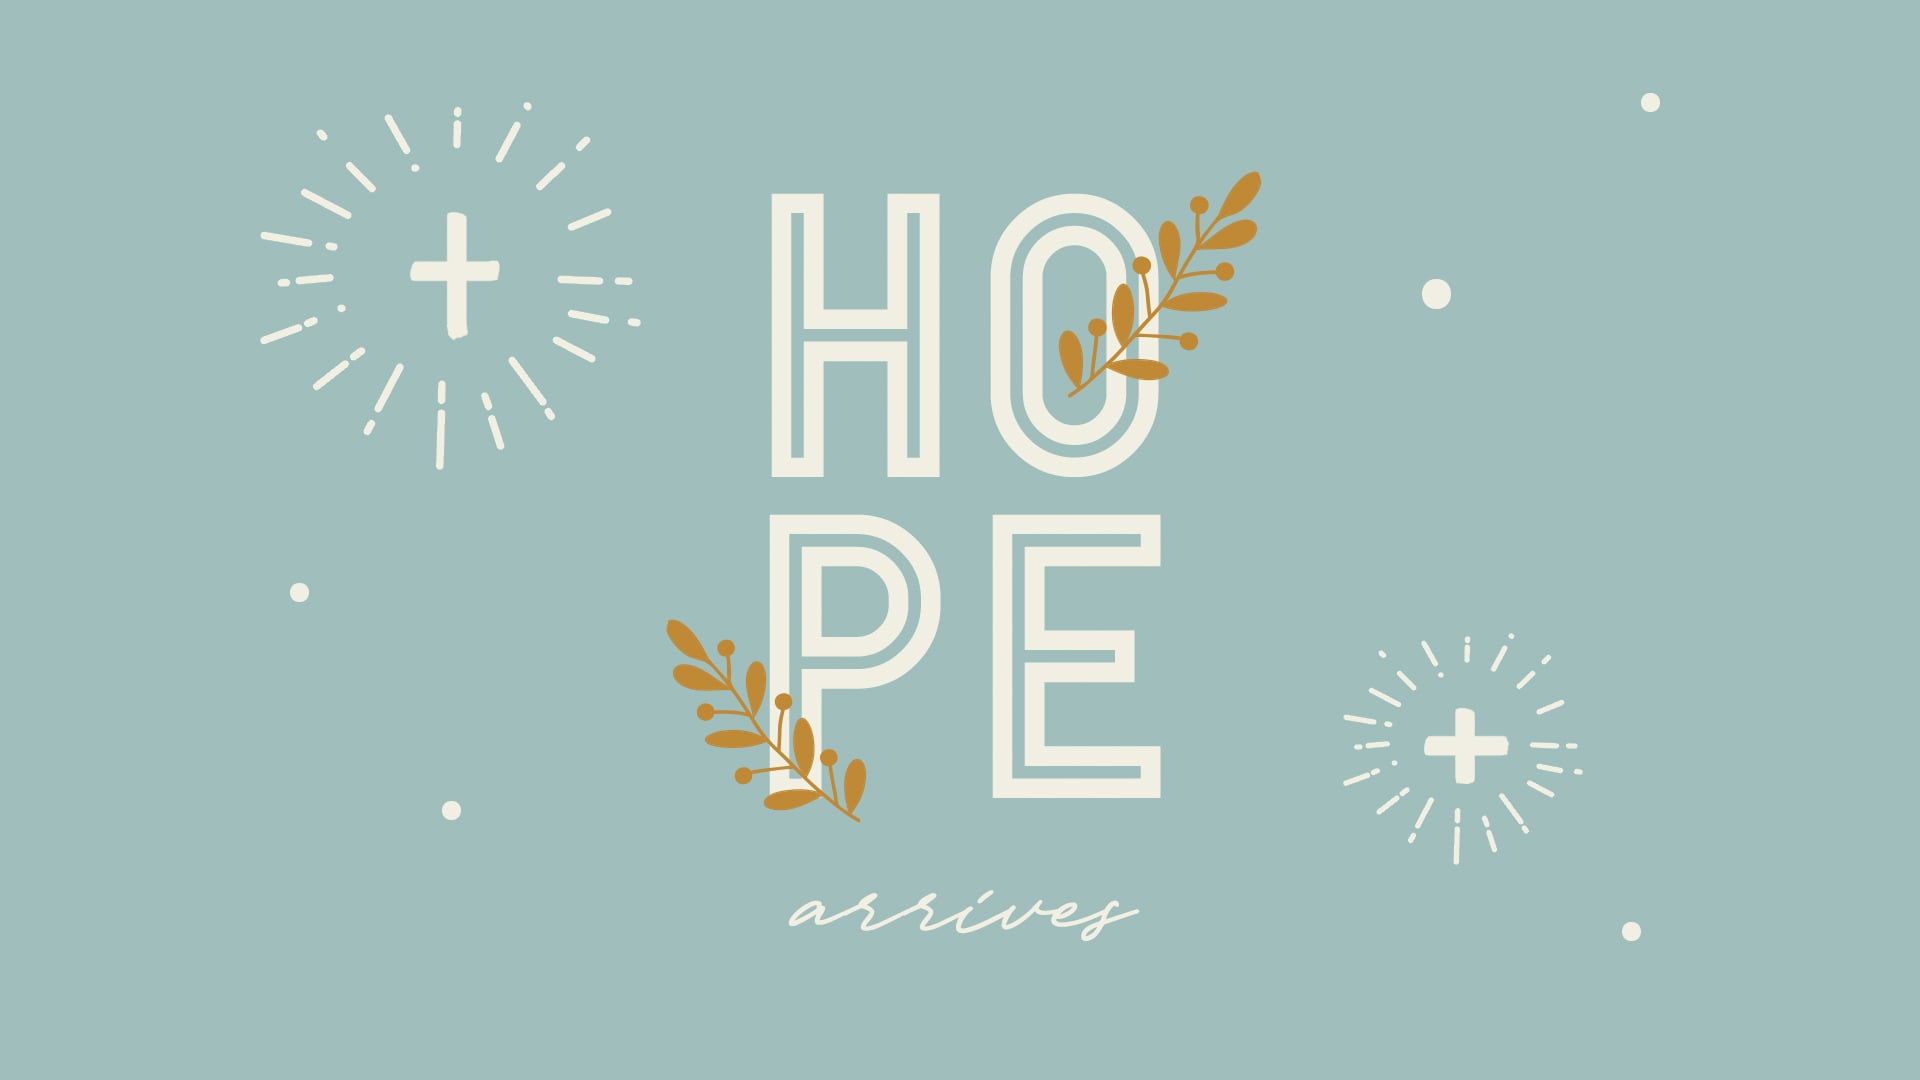 Hope Arrives: For I Have Seen & Heard